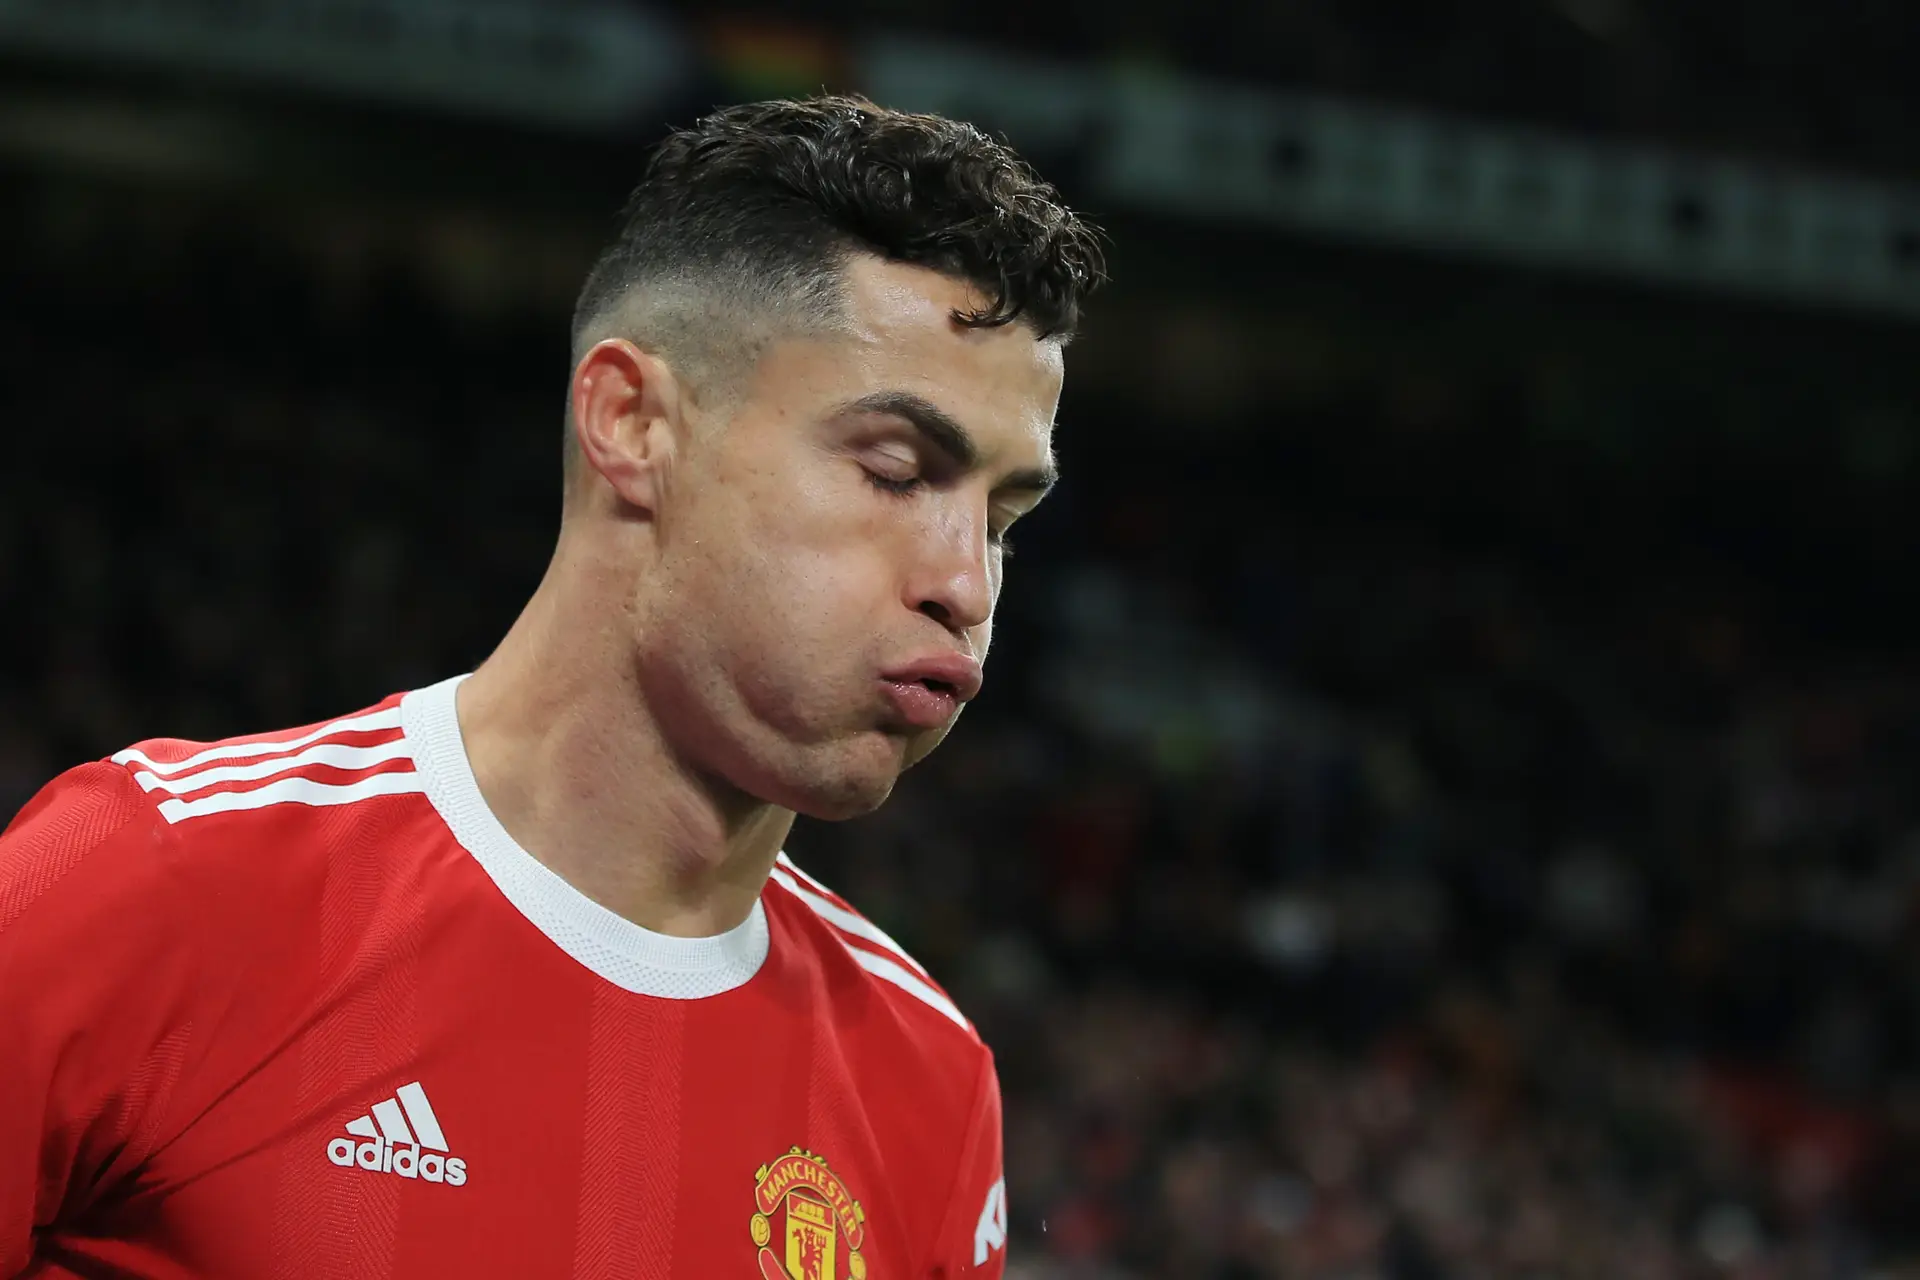 “Ansioso por sair de Manchester?”: aeroporto de Liverpool quer ajudar Ronaldo a decidir próximo destino